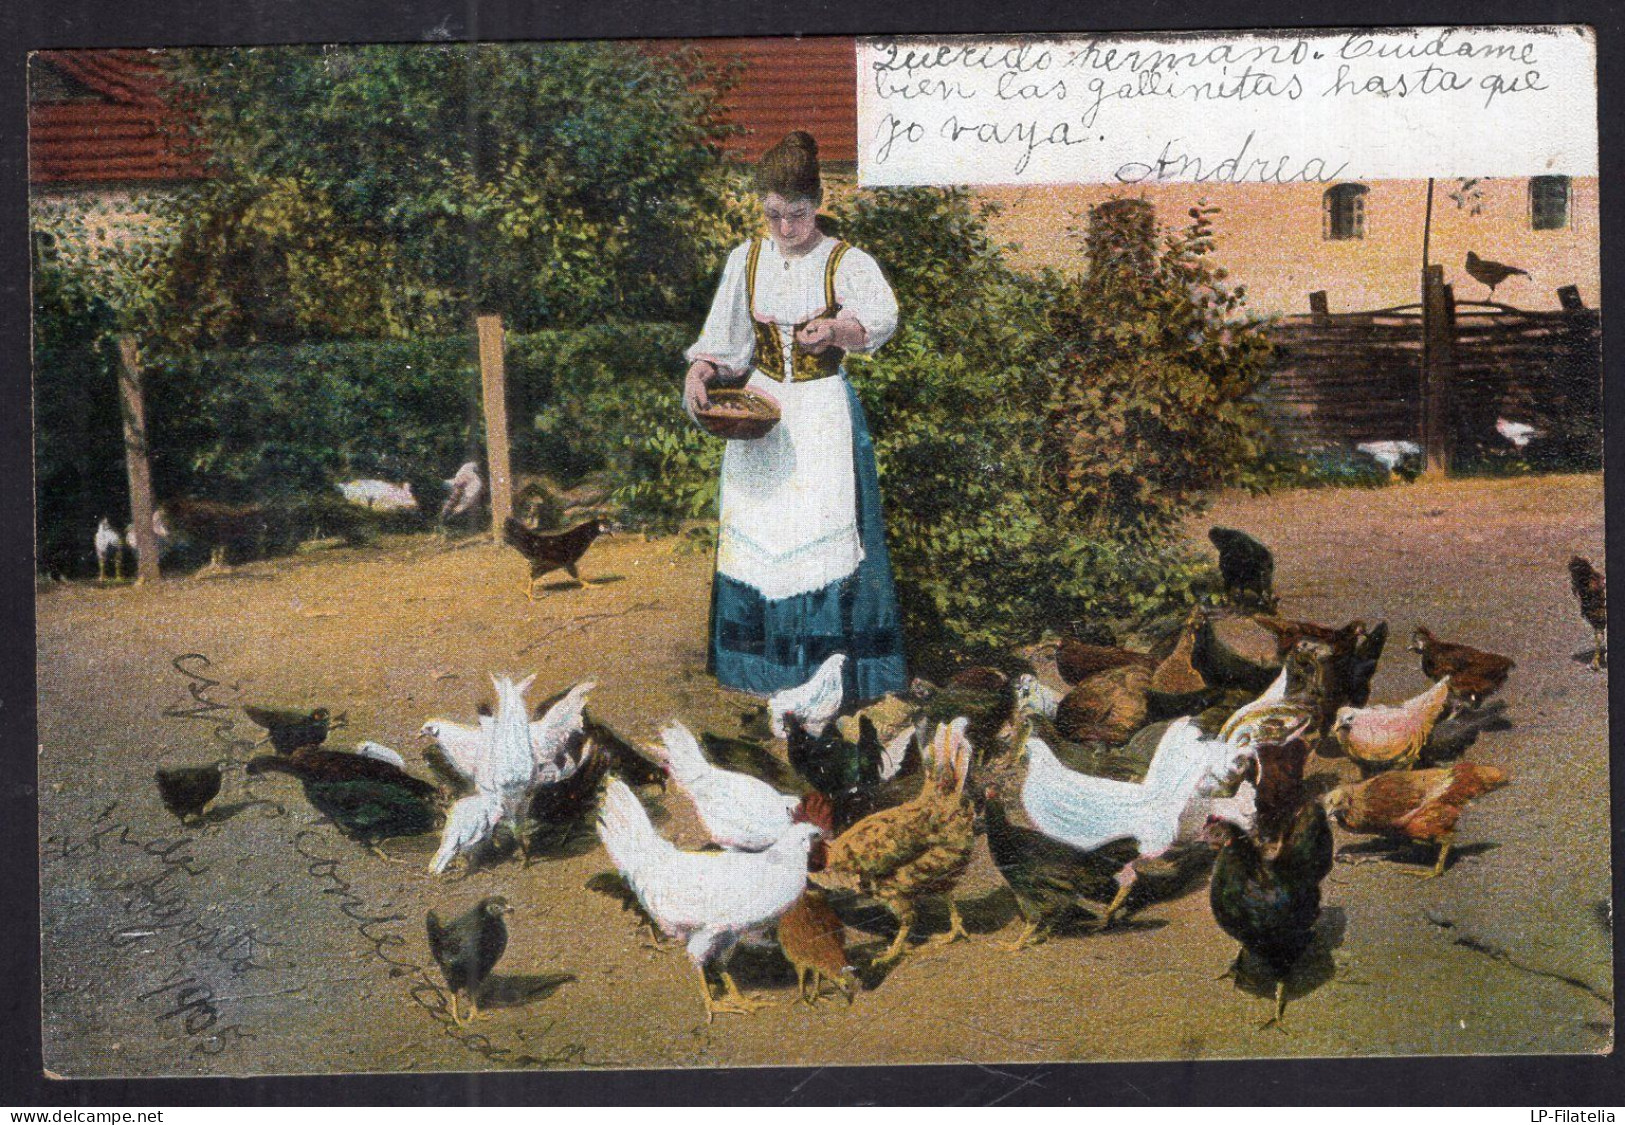 Postcard - 1905 - Woman Feeding Chickens - Vrouwen